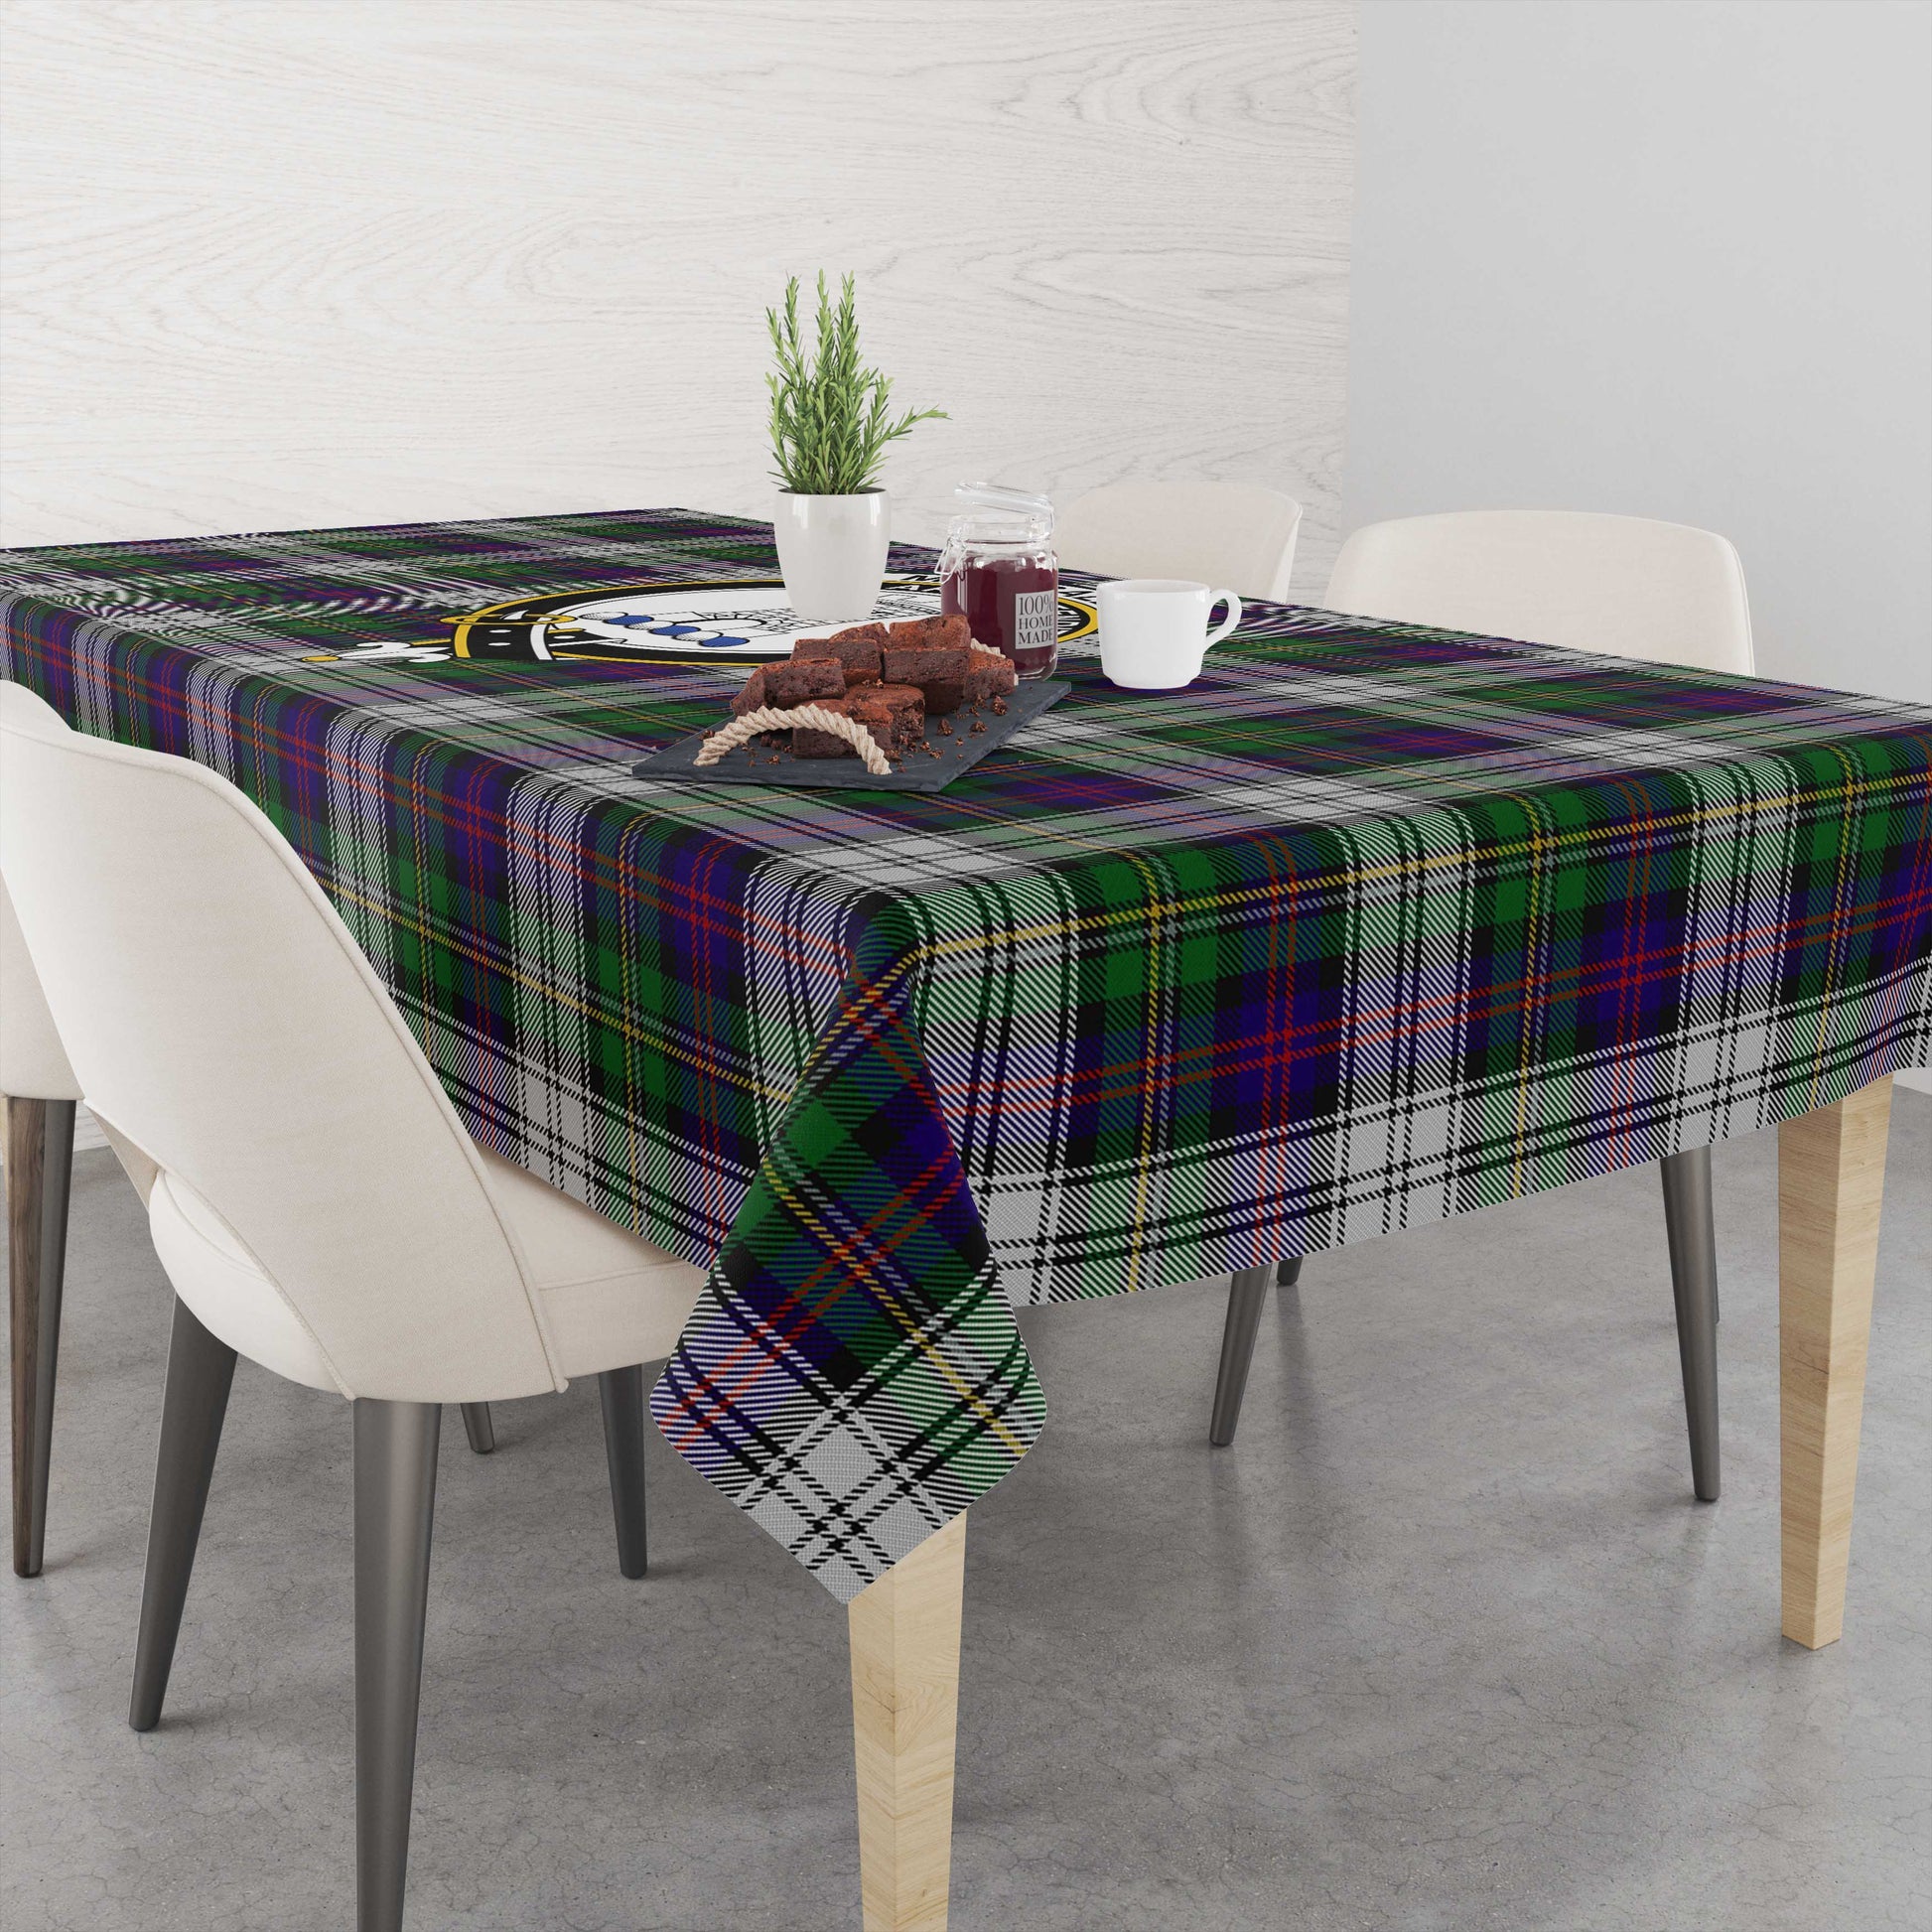 maccallum-dress-tatan-tablecloth-with-family-crest